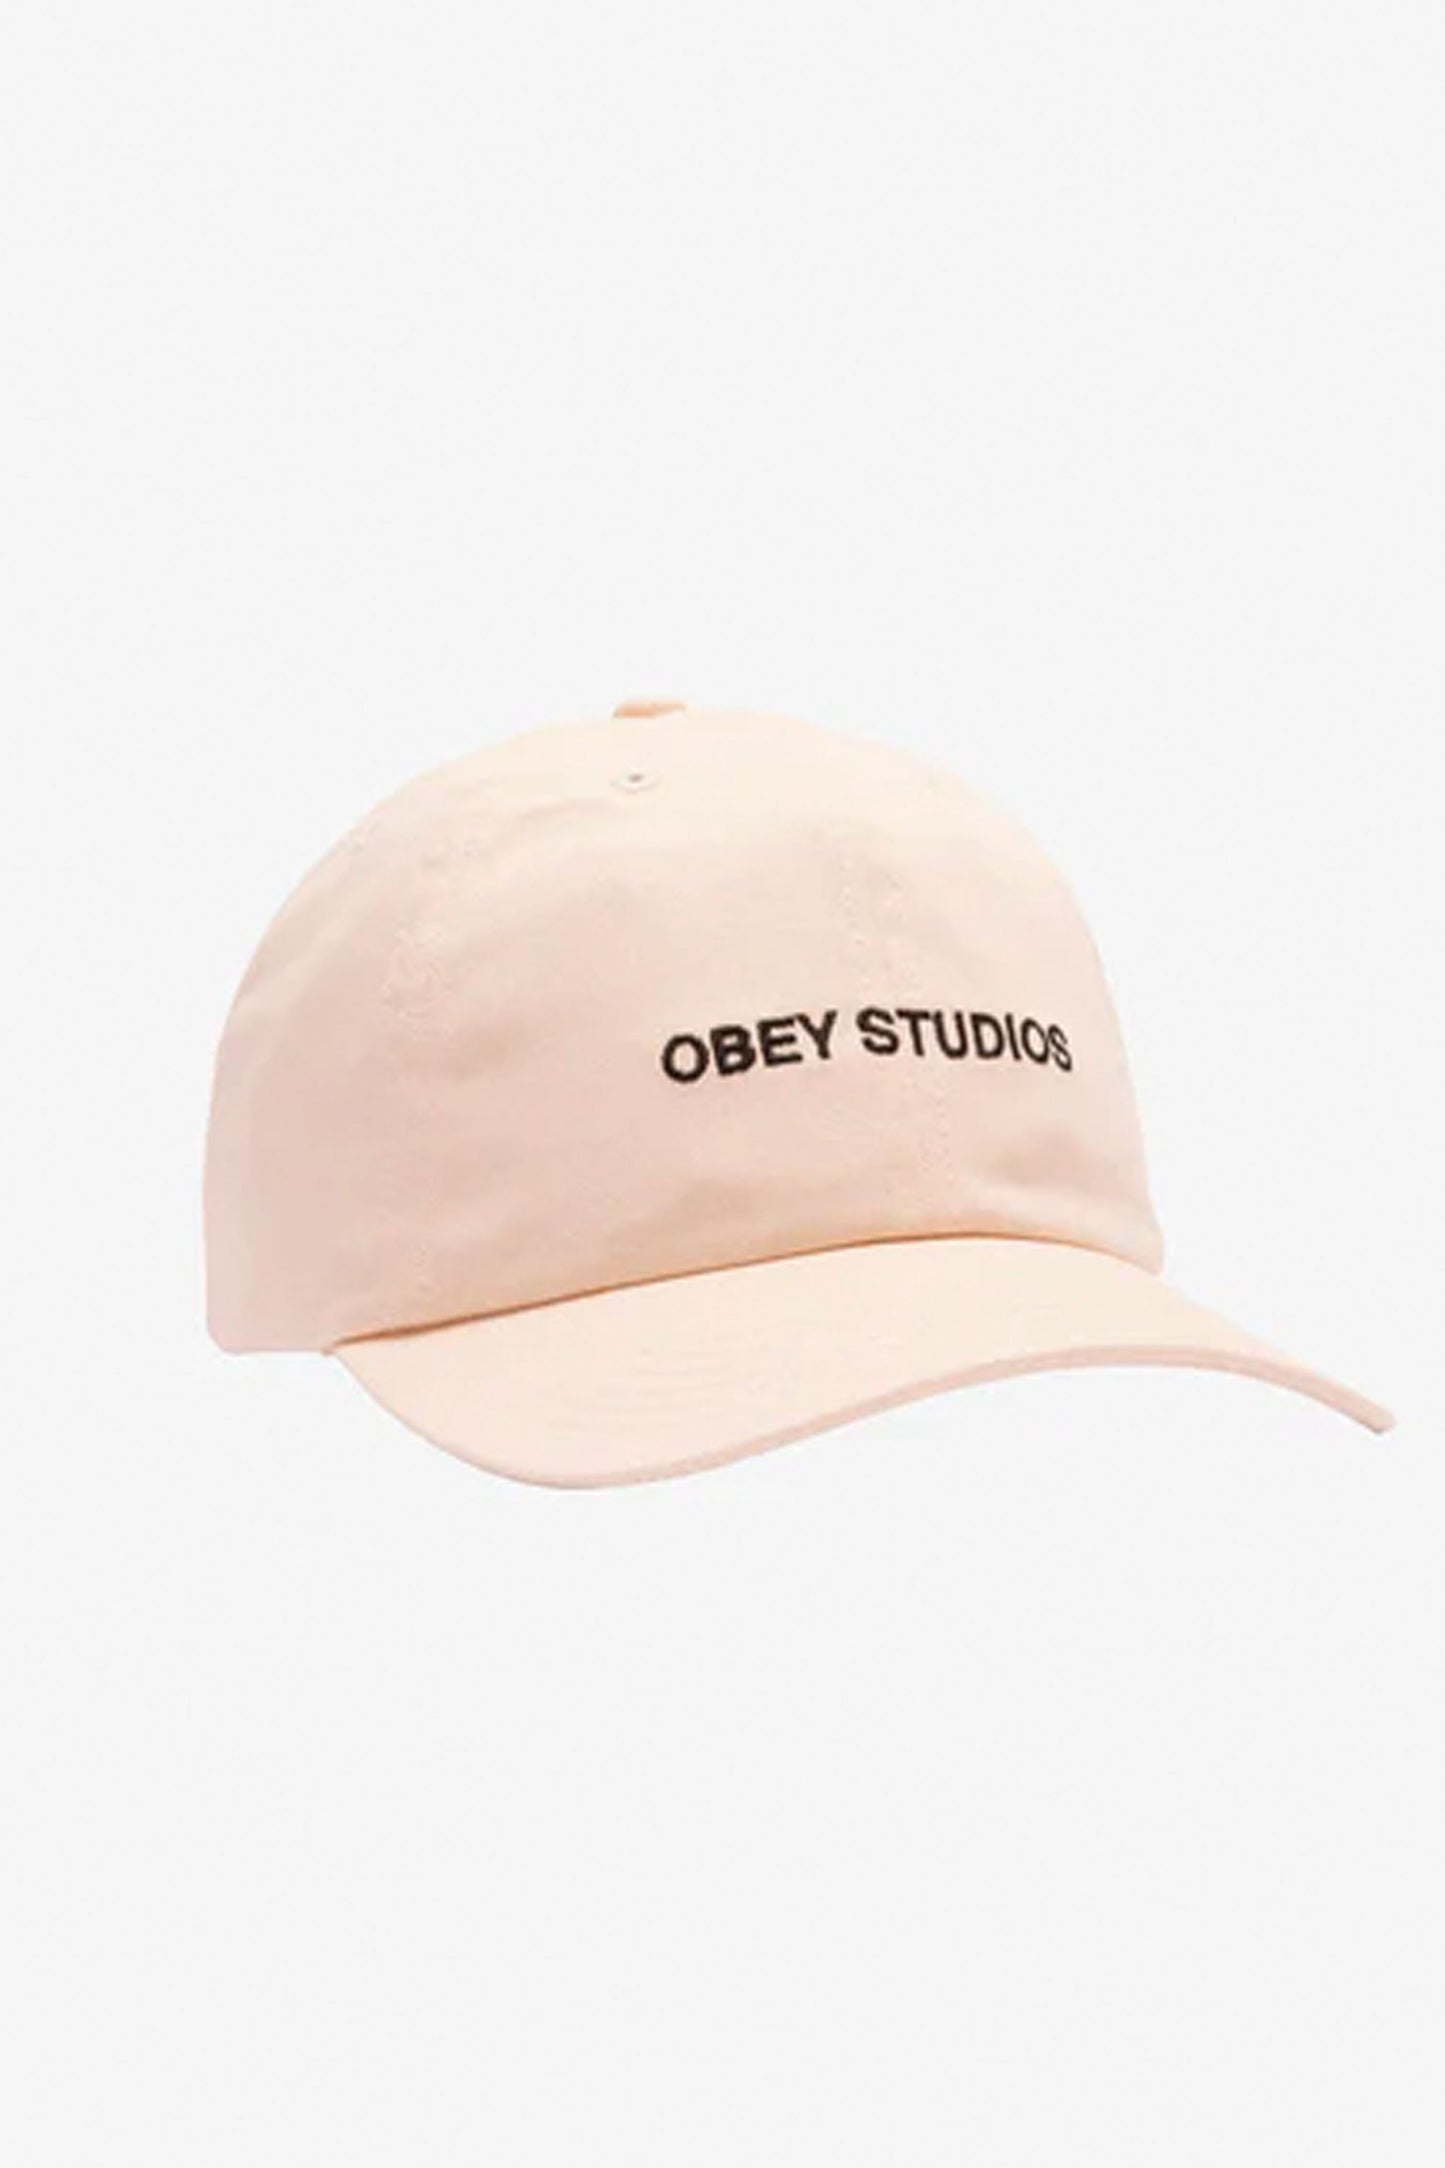 Pukas-surf-shop-man-gorra-OBEY-Studios-Strapback-Hat